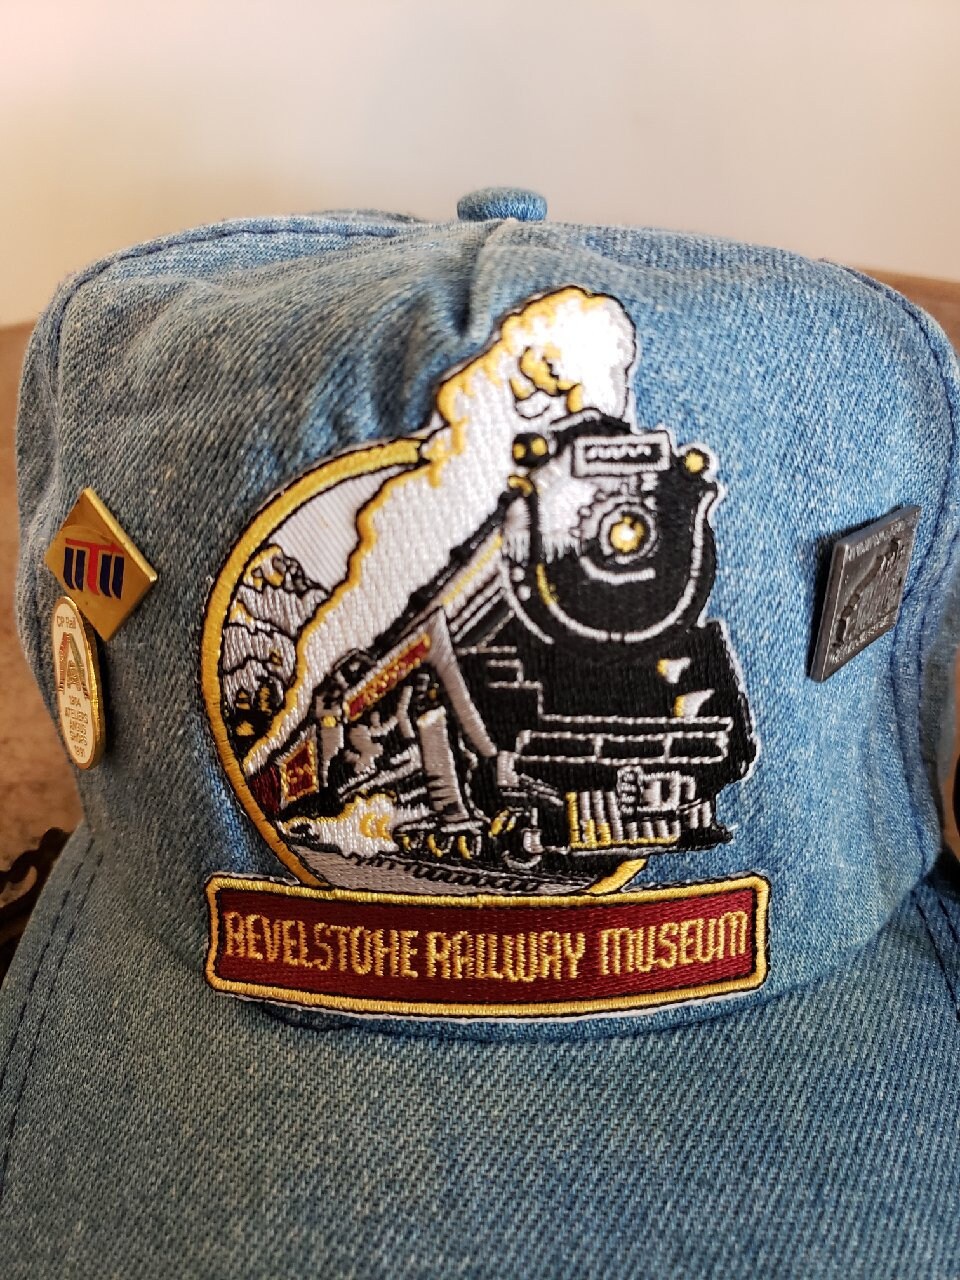 Vintage Revelstoke Railway Museum Denim Hat 3 Pins Incl - Etsy Canada